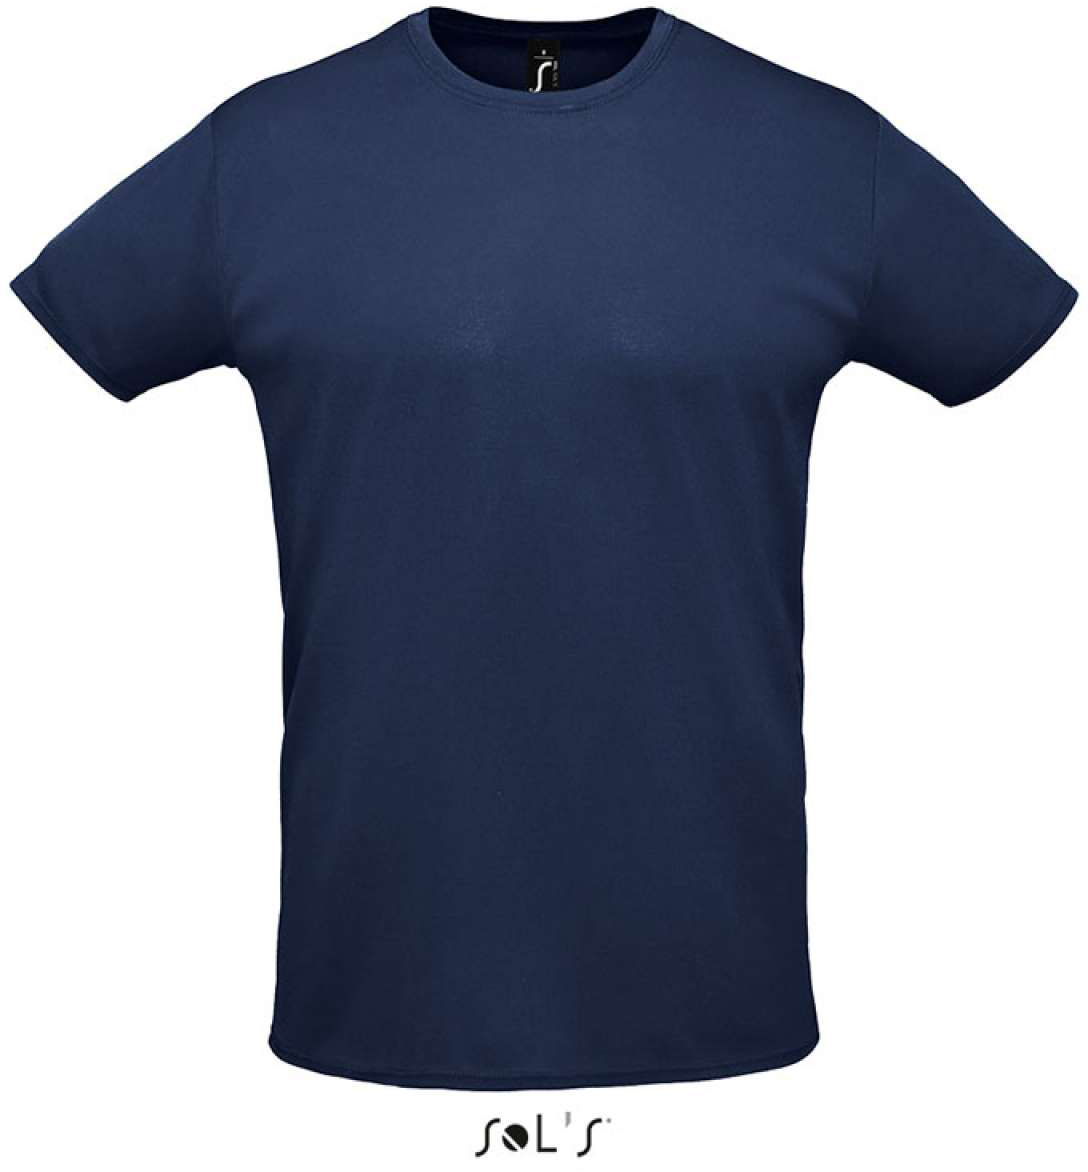 Sol's Sprint - Unisex Sport T-shirt - blau